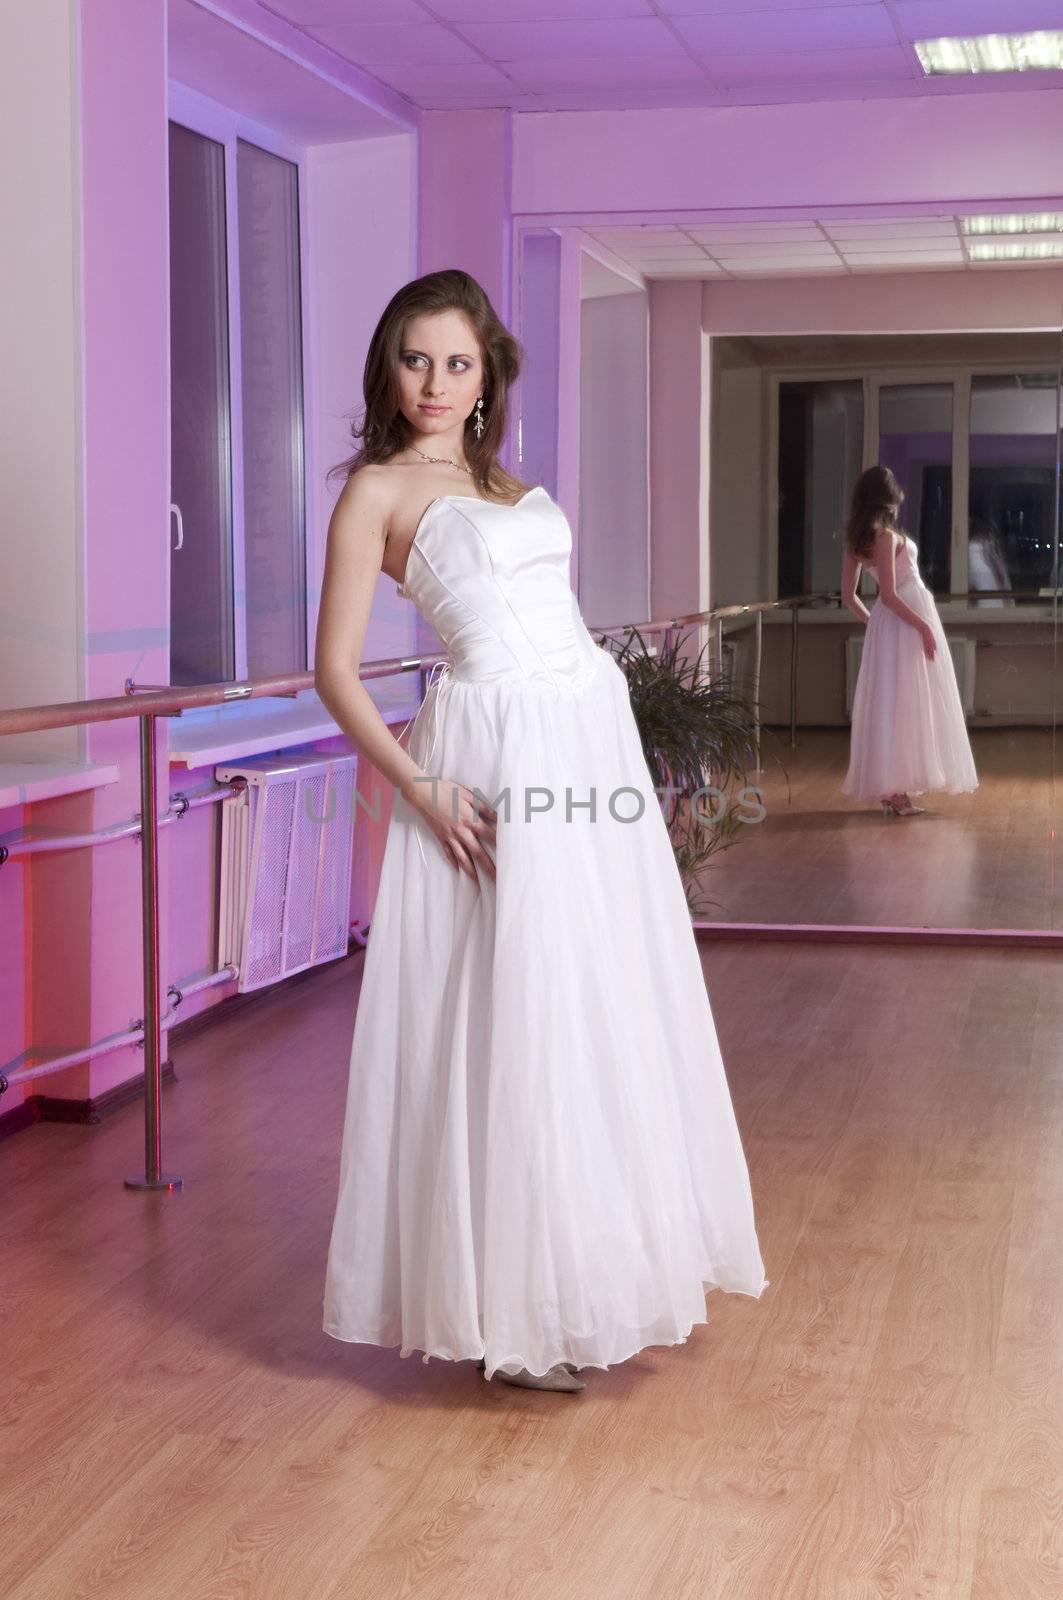 Girl in white wedding dress in dance studio